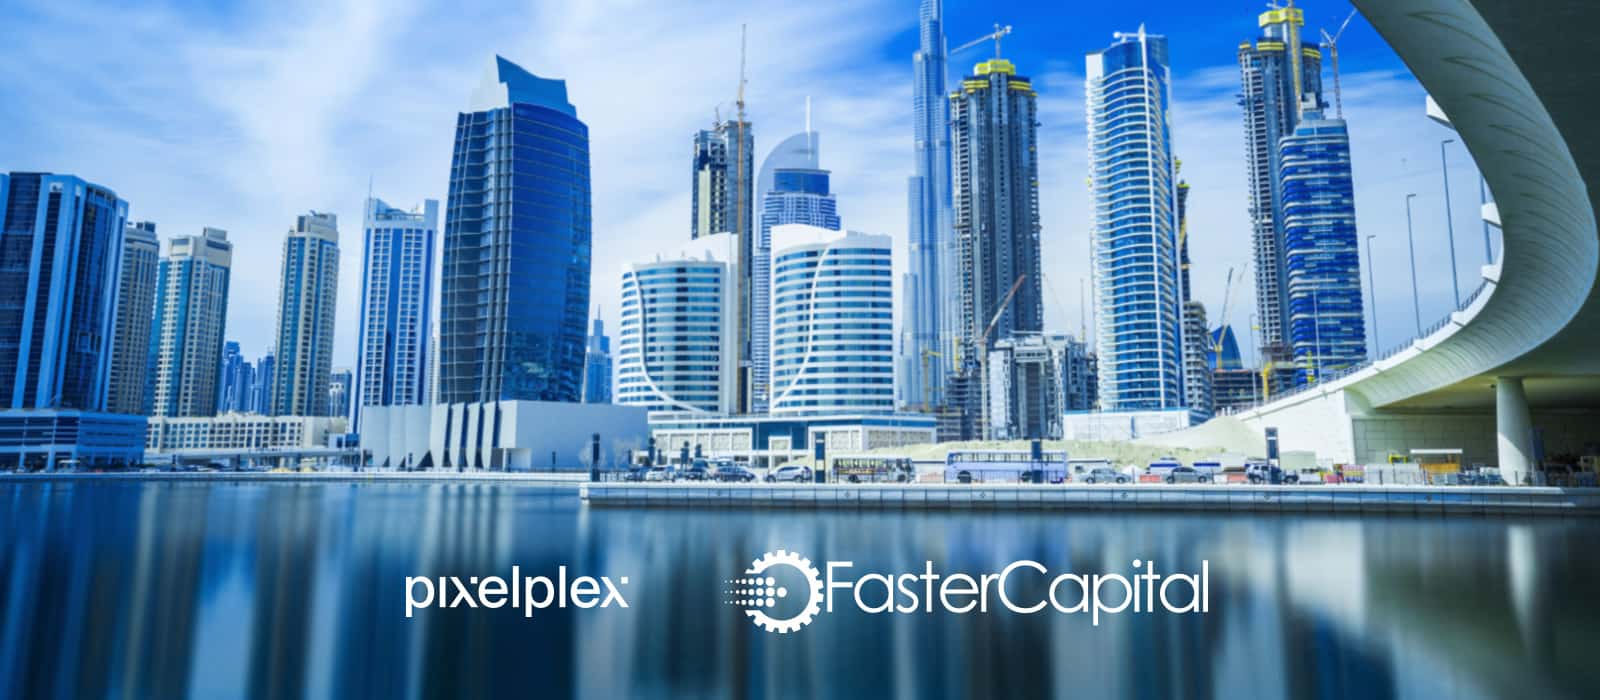 Panoramic view of Dubai city next to PixelPlex and FasterCapital logos